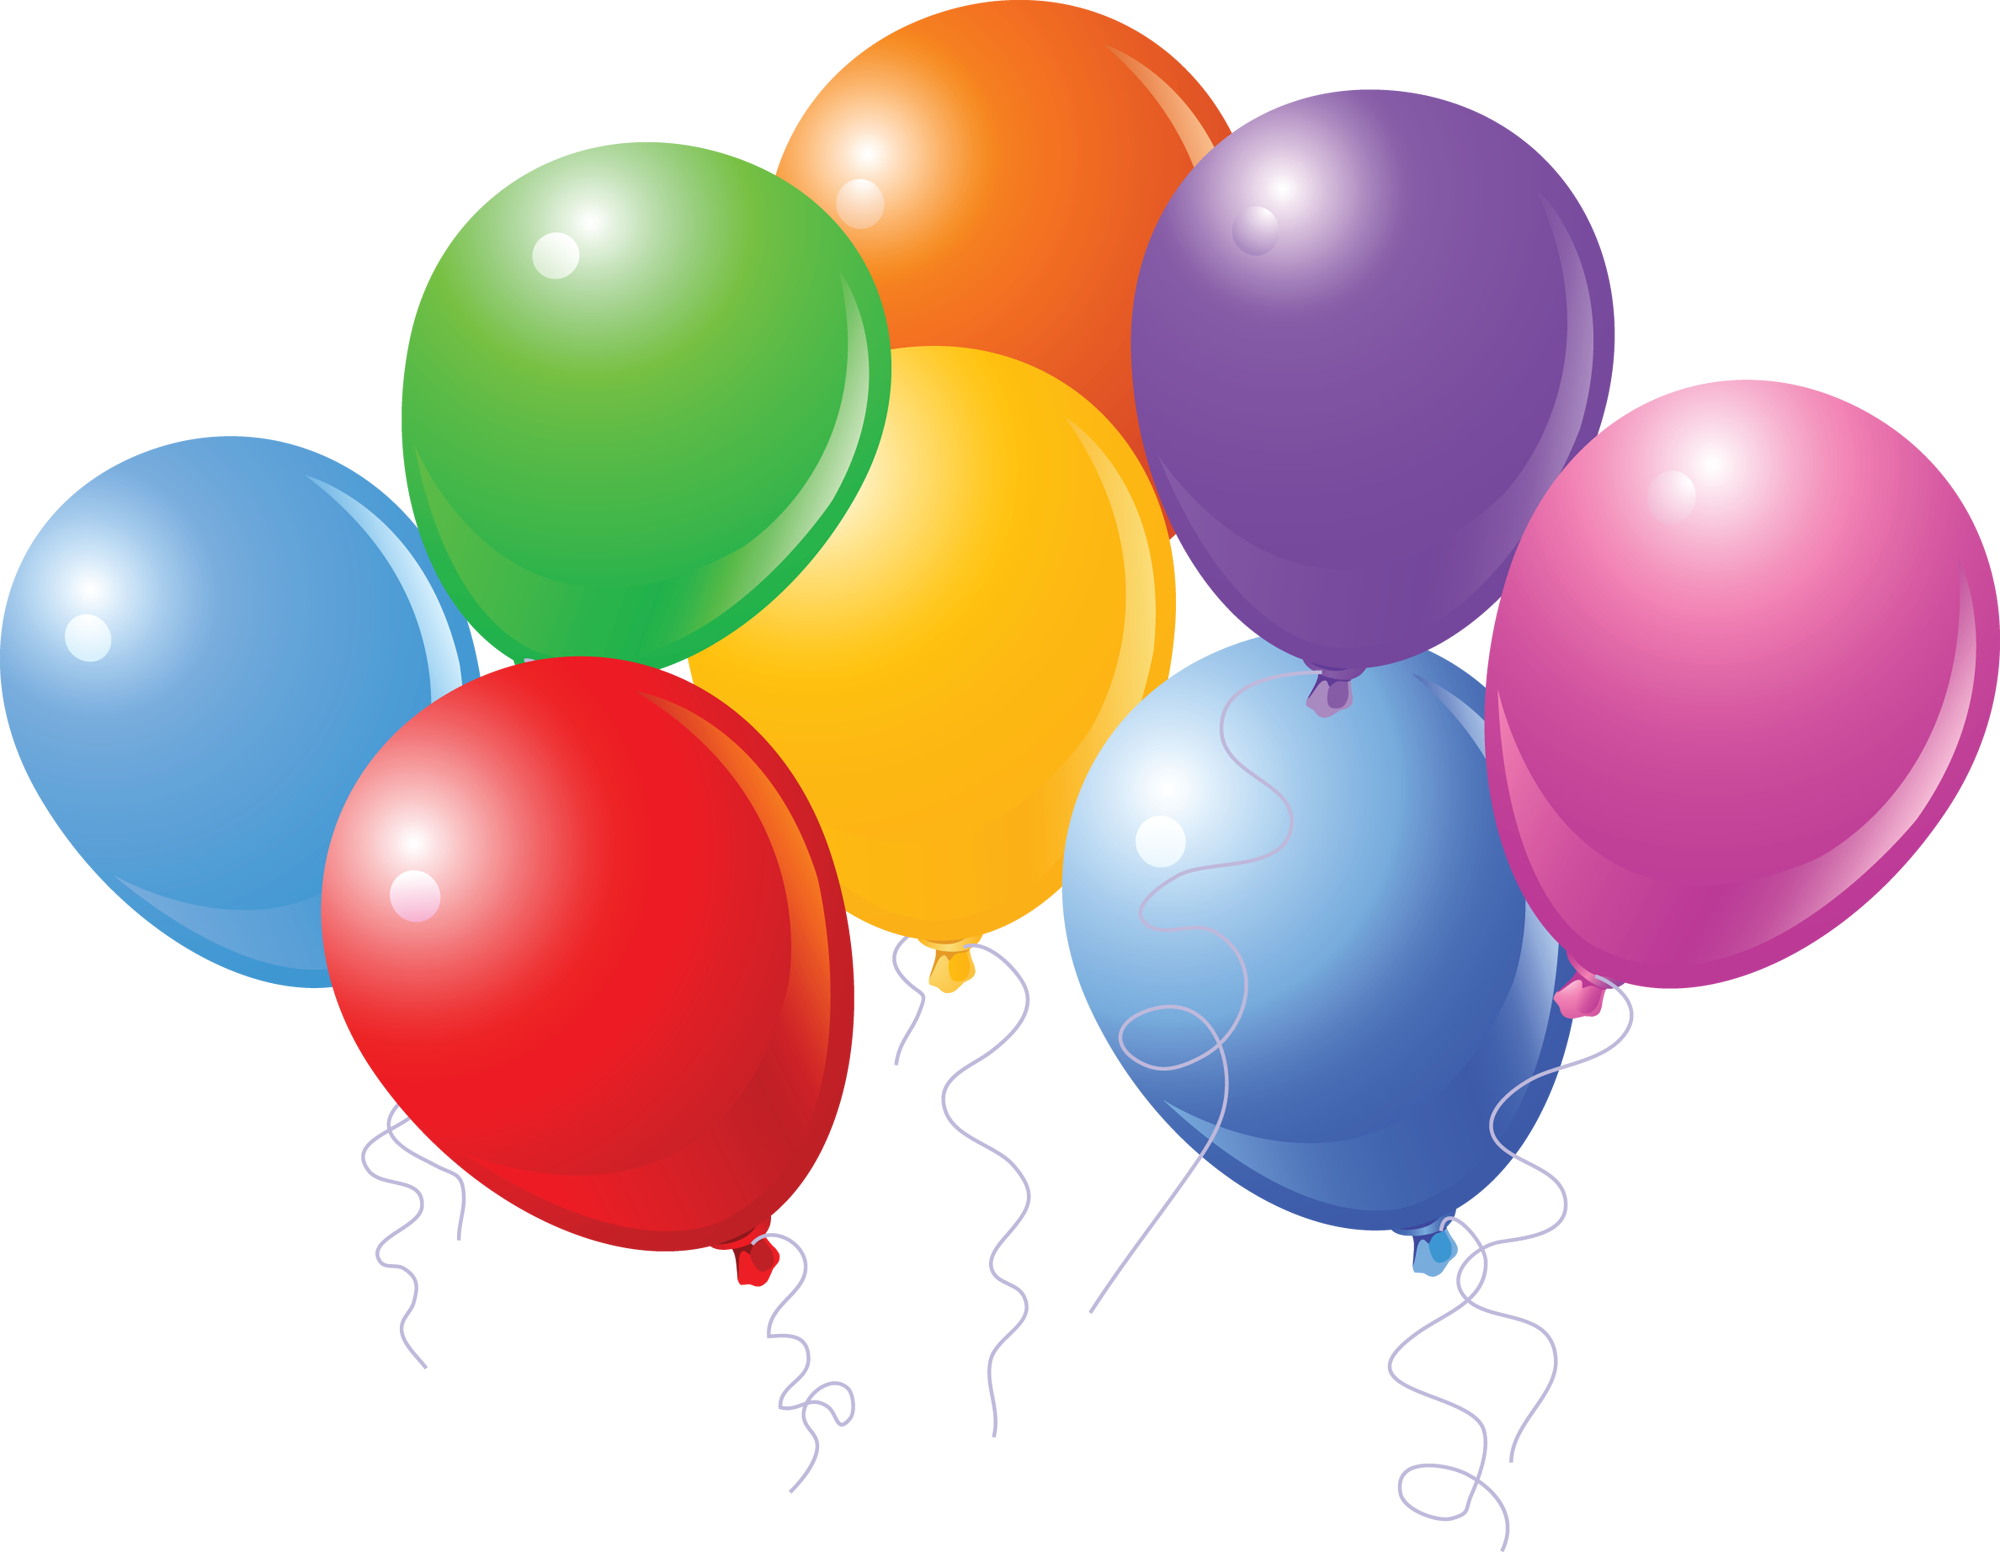 Happy Birthday Balloon - ClipArt Best